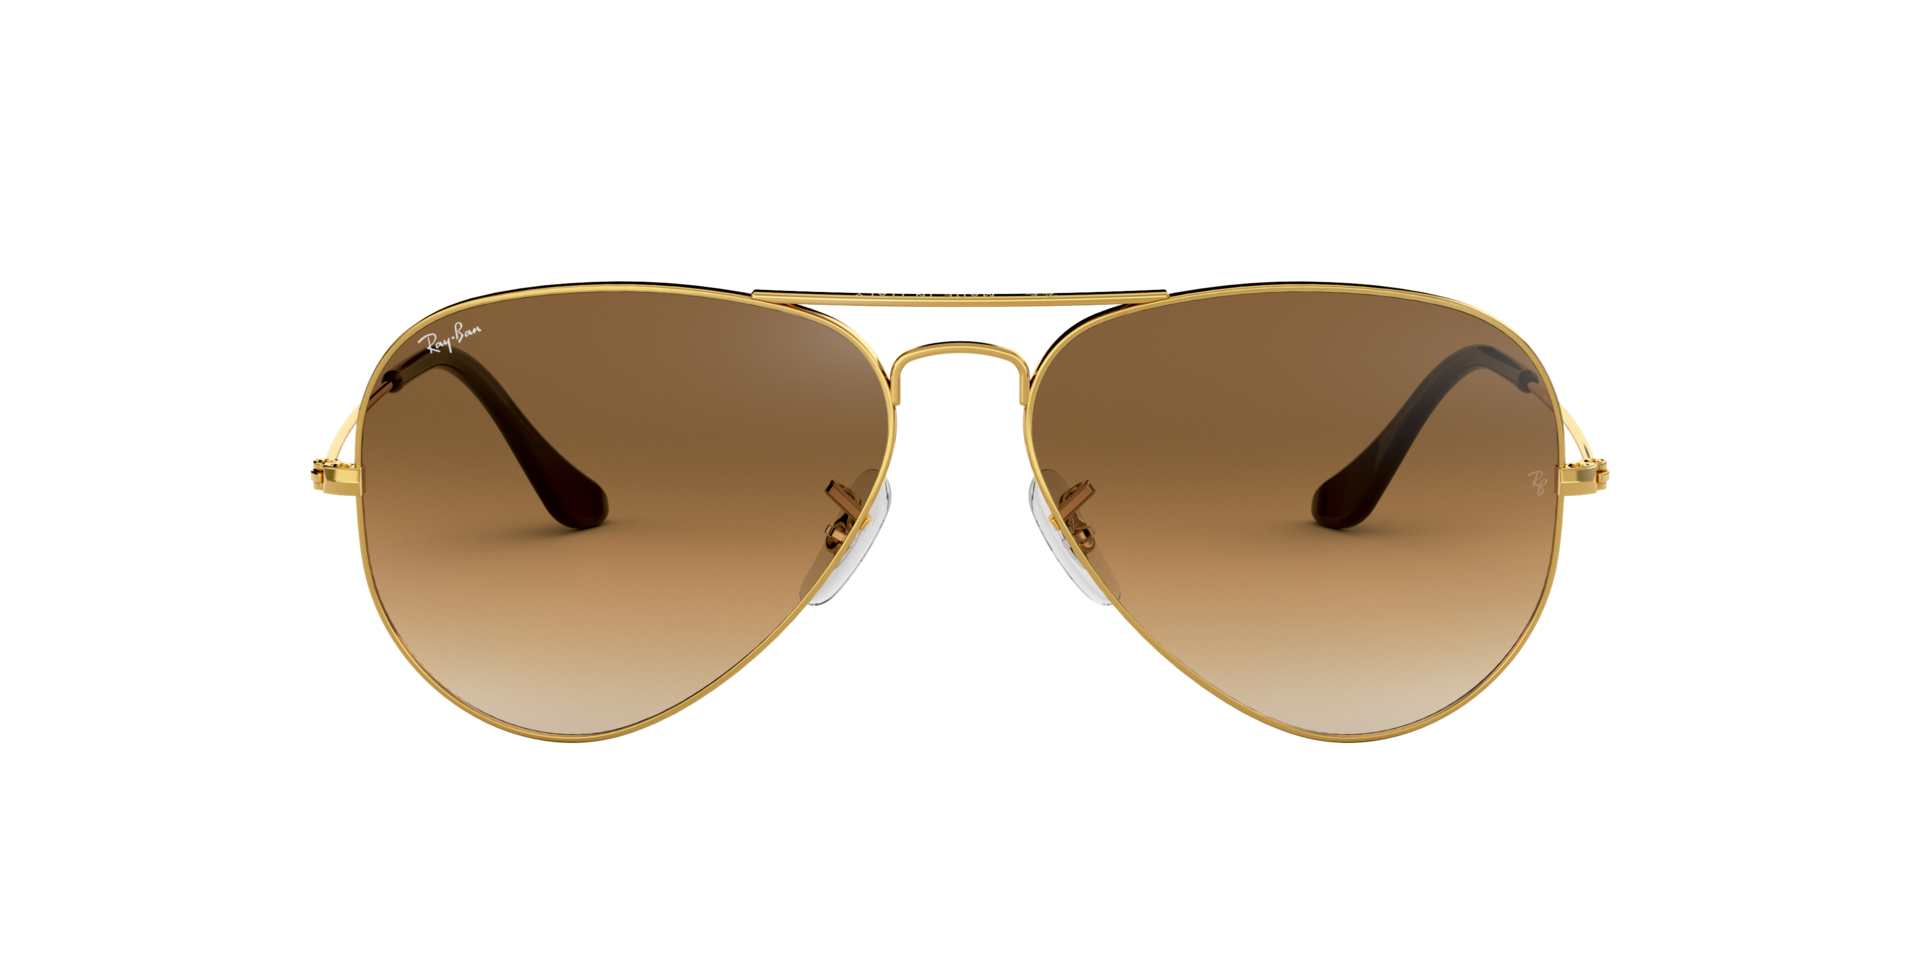 Ray Ban l 湯姆克魯斯同款-飛官框太陽眼鏡 金棕橙(62mm)